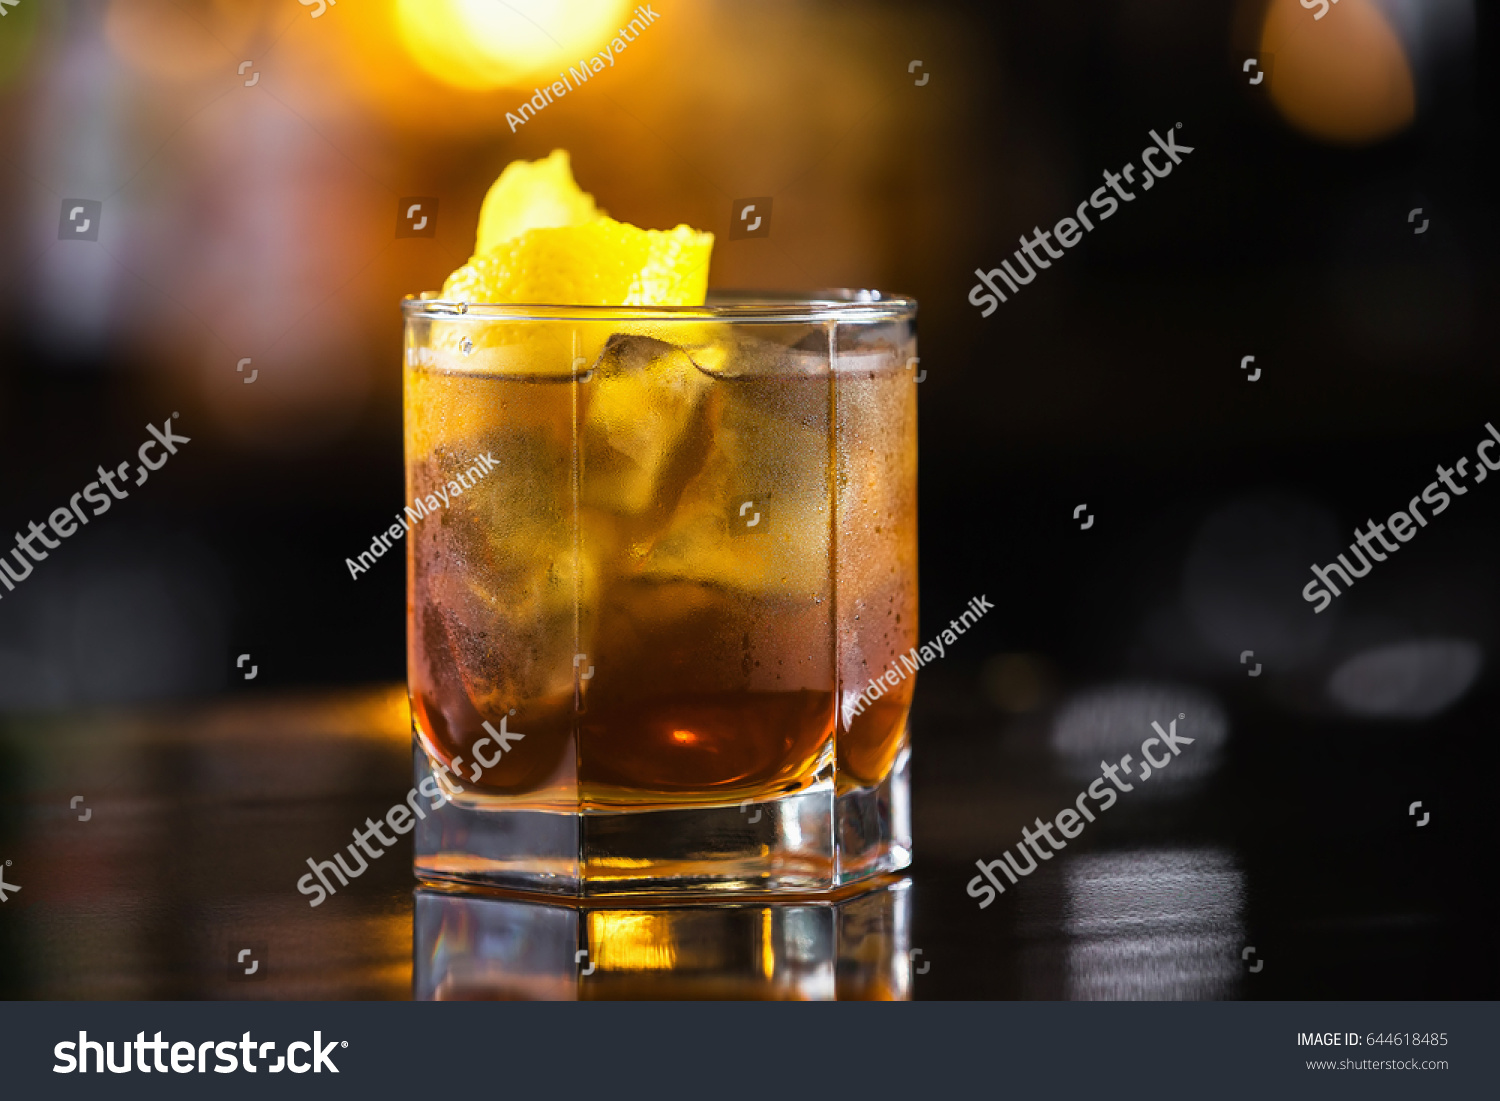 Download Closeup Image Glass Rum Cola Cocktail Stock Photo Edit Now 644618485 PSD Mockup Templates